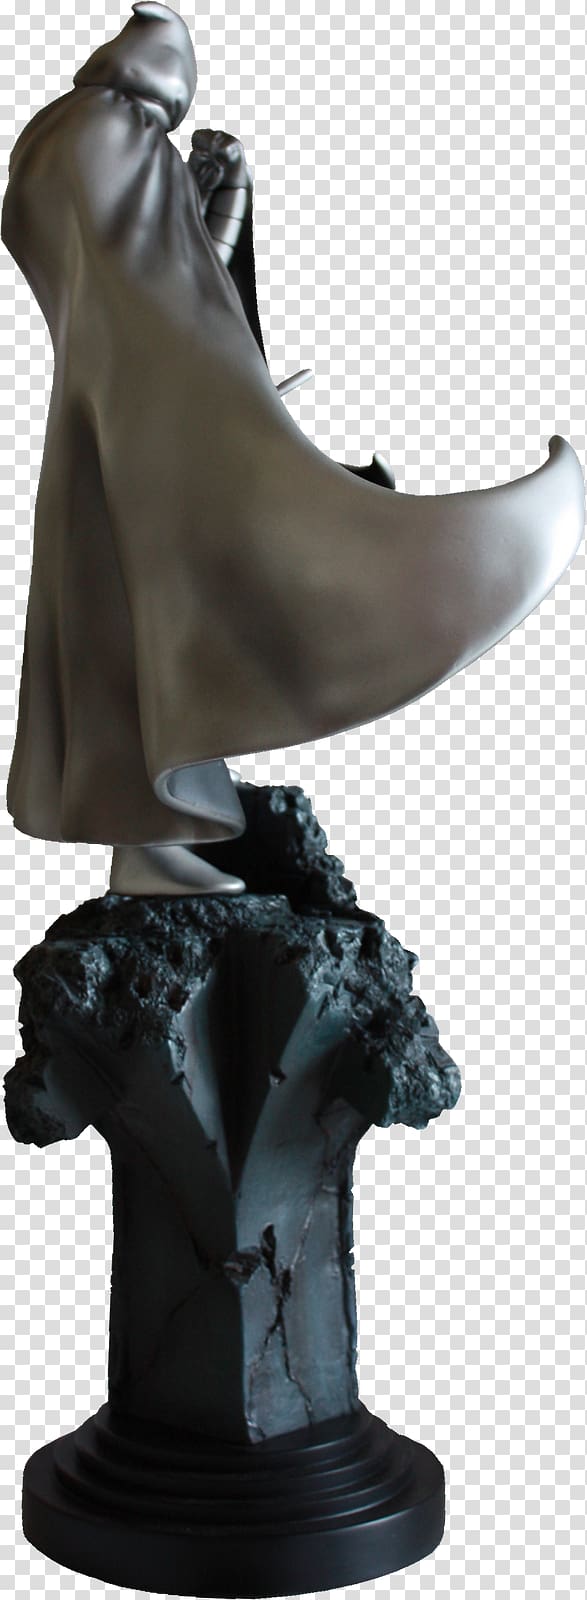 Bronze sculpture Statue Figurine Classical sculpture, Moon Knight transparent background PNG clipart